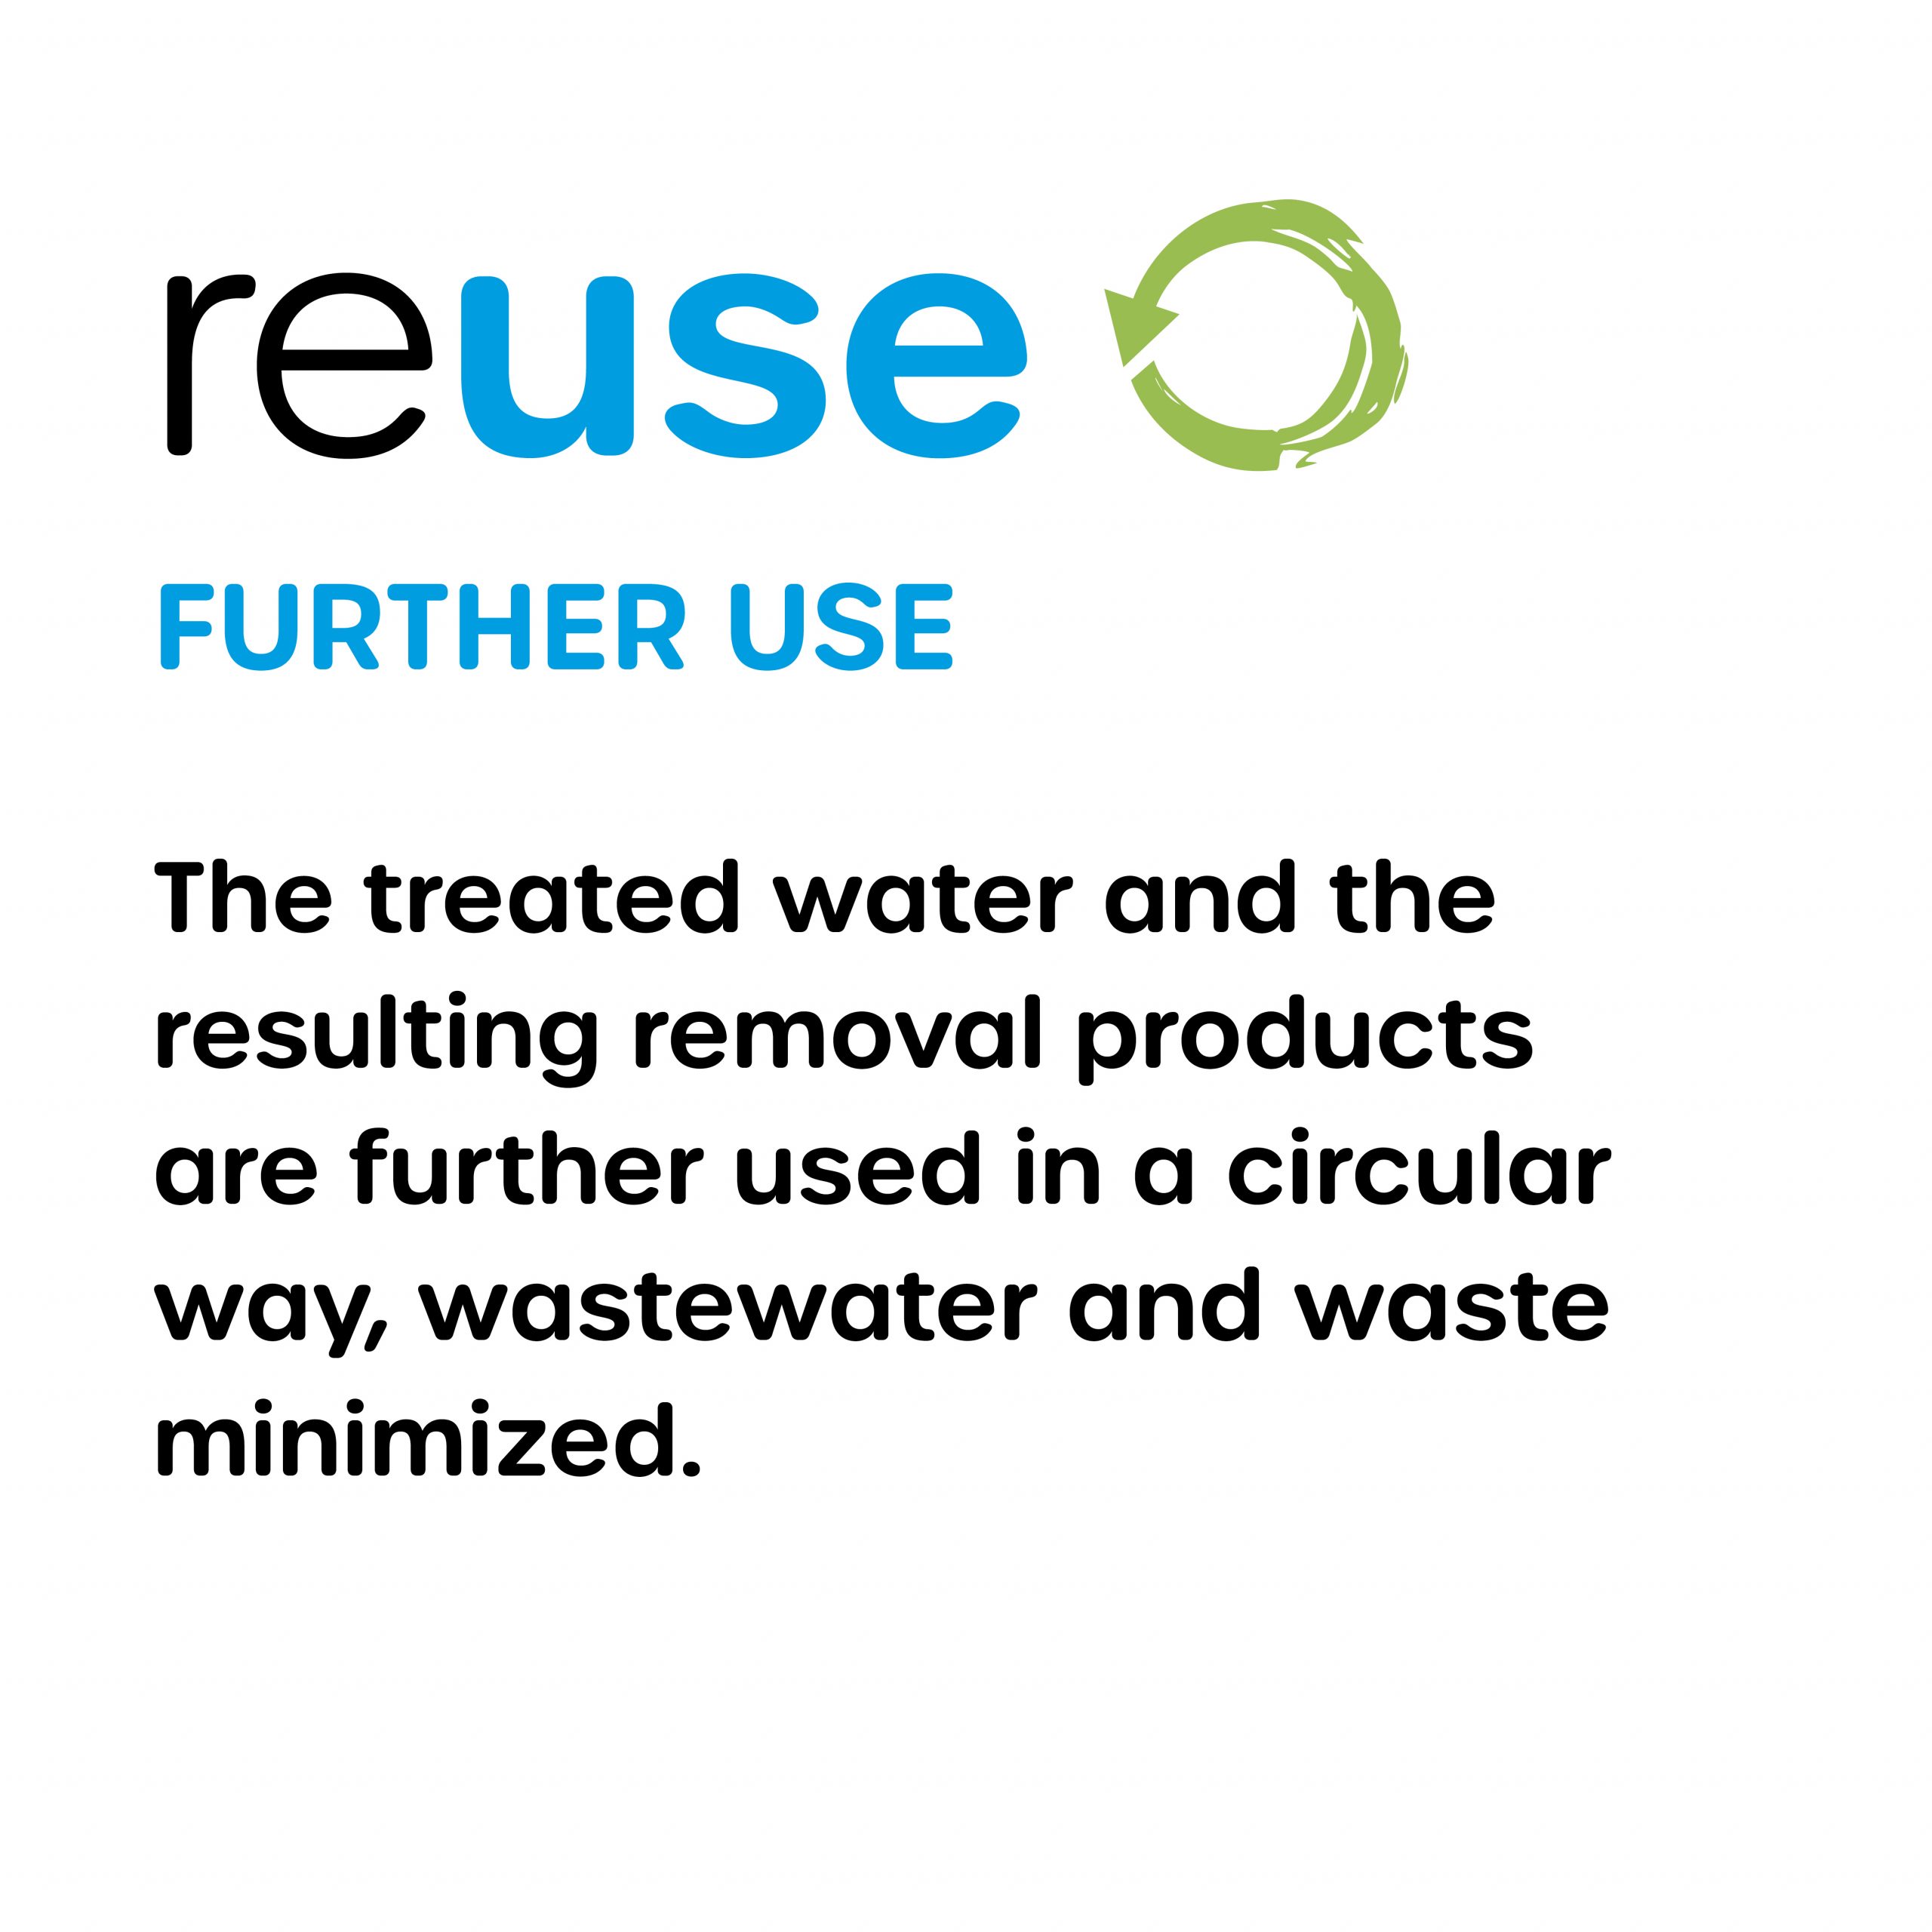 Wasser 3.0 reuse: reuse of microplastics - waste was a resource